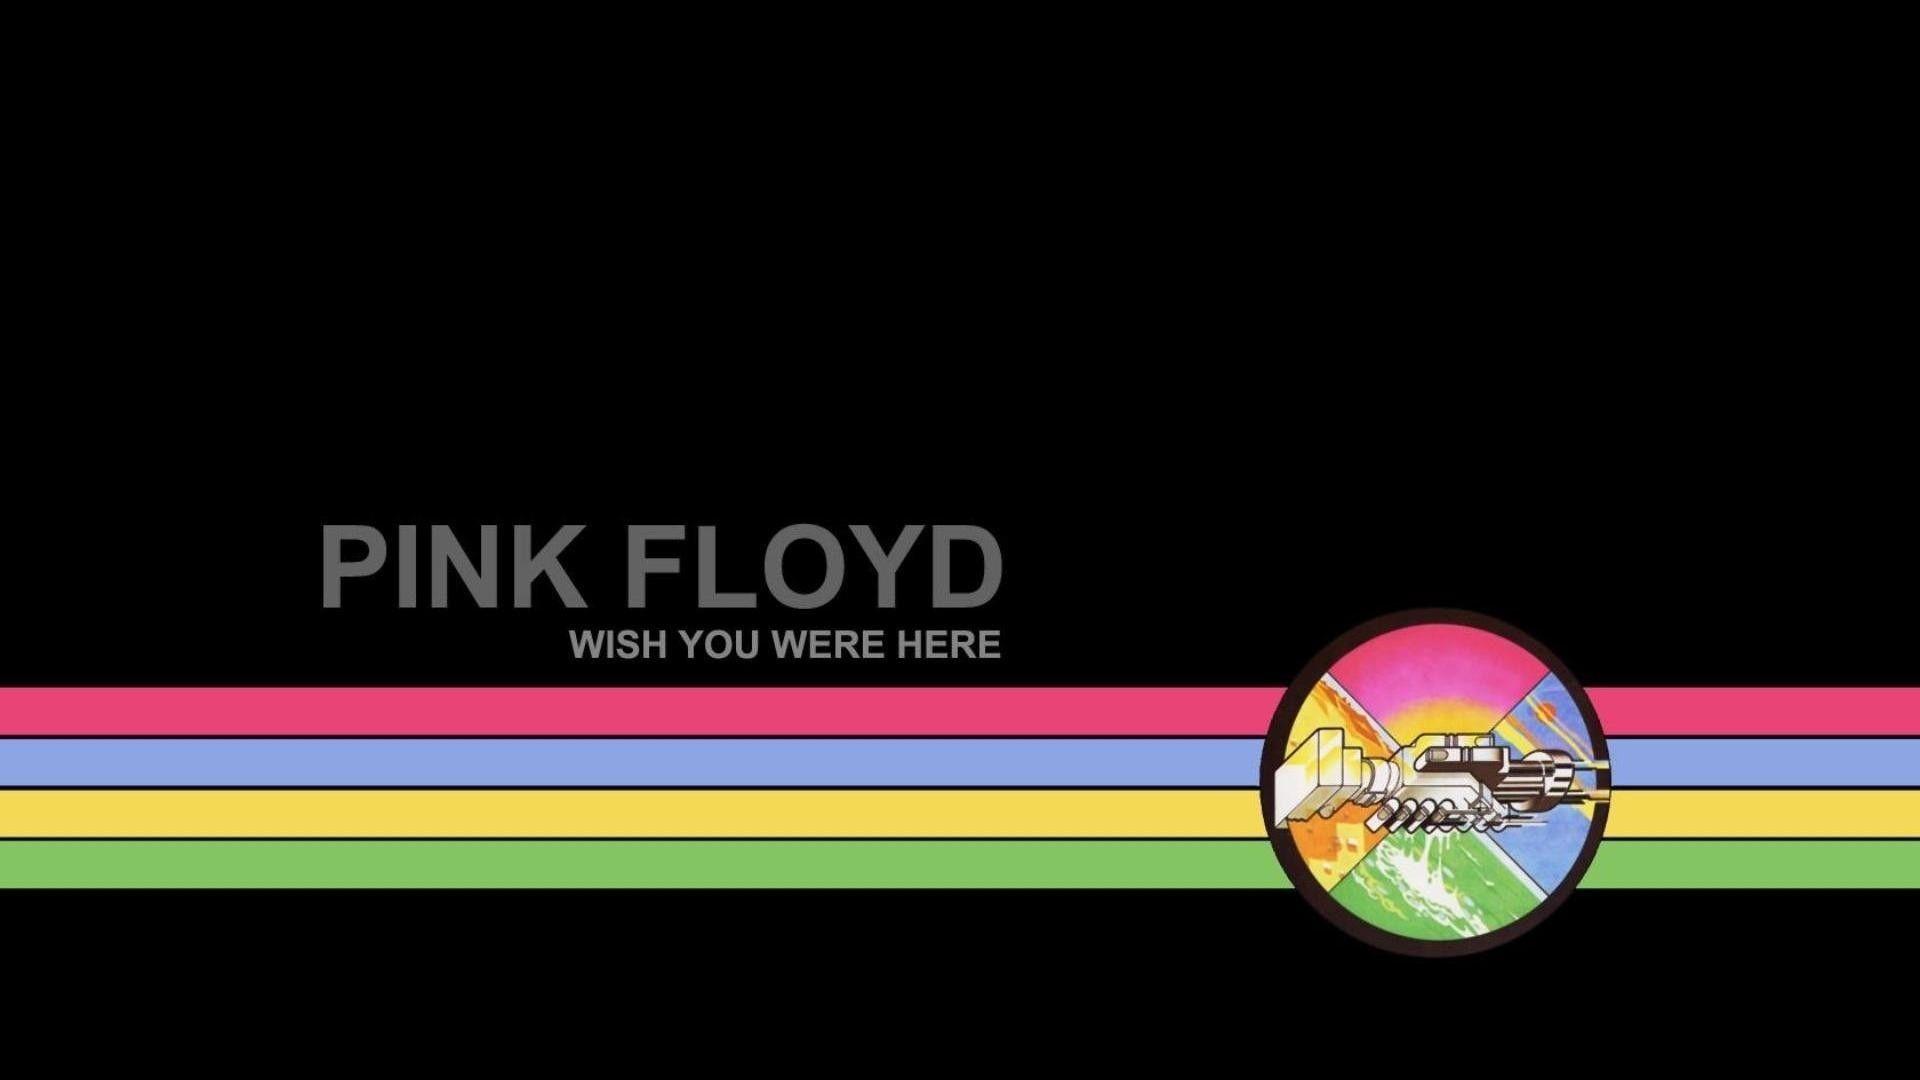 General 1920x1080 Pink Floyd wish you were here. Pink floyd